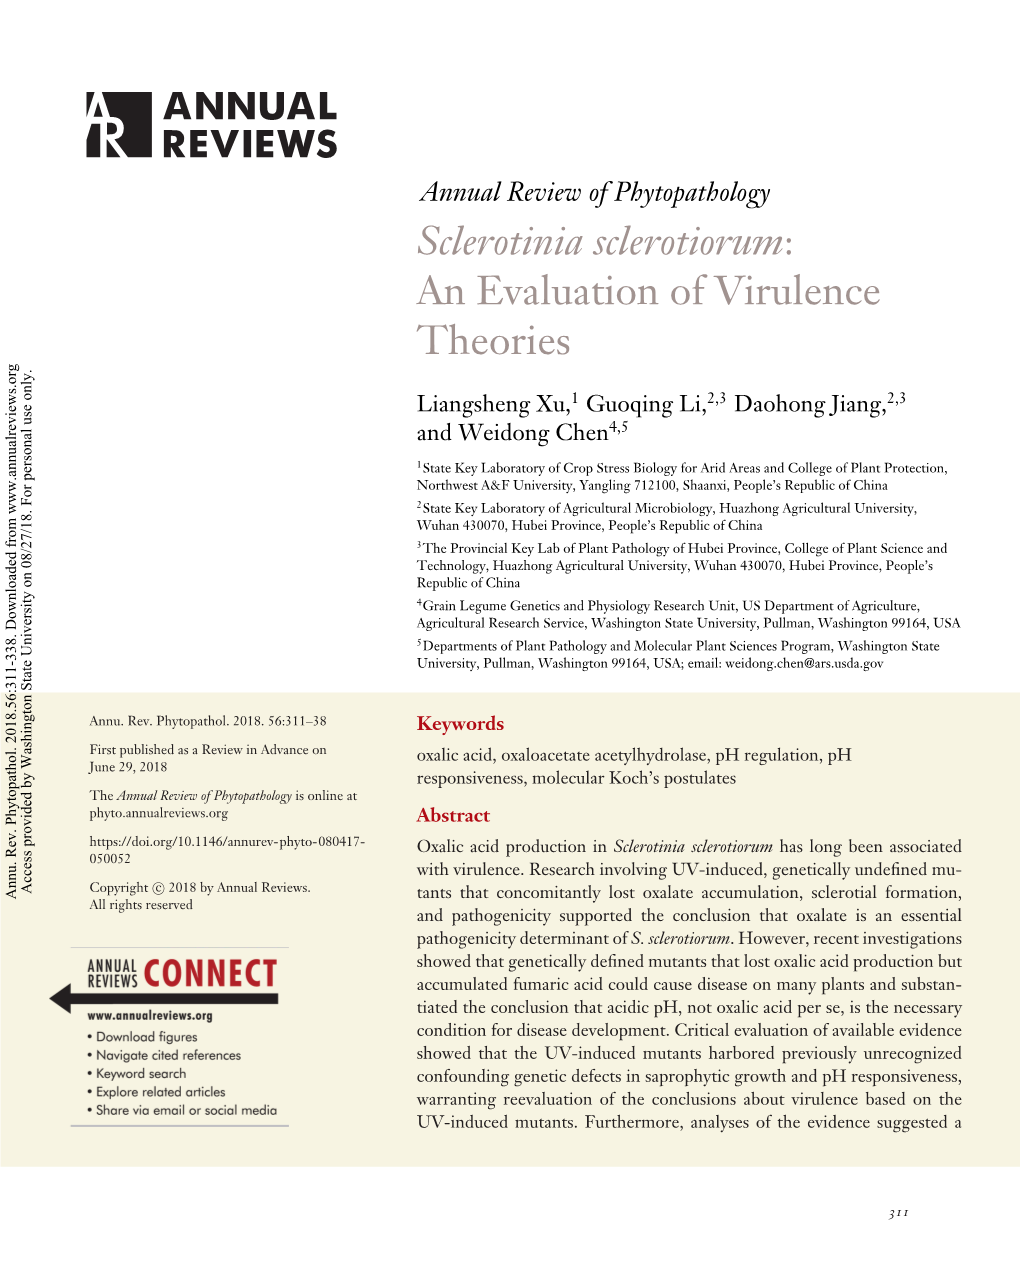 Sclerotinia Sclerotiorum: an Evaluation of Virulence Theories